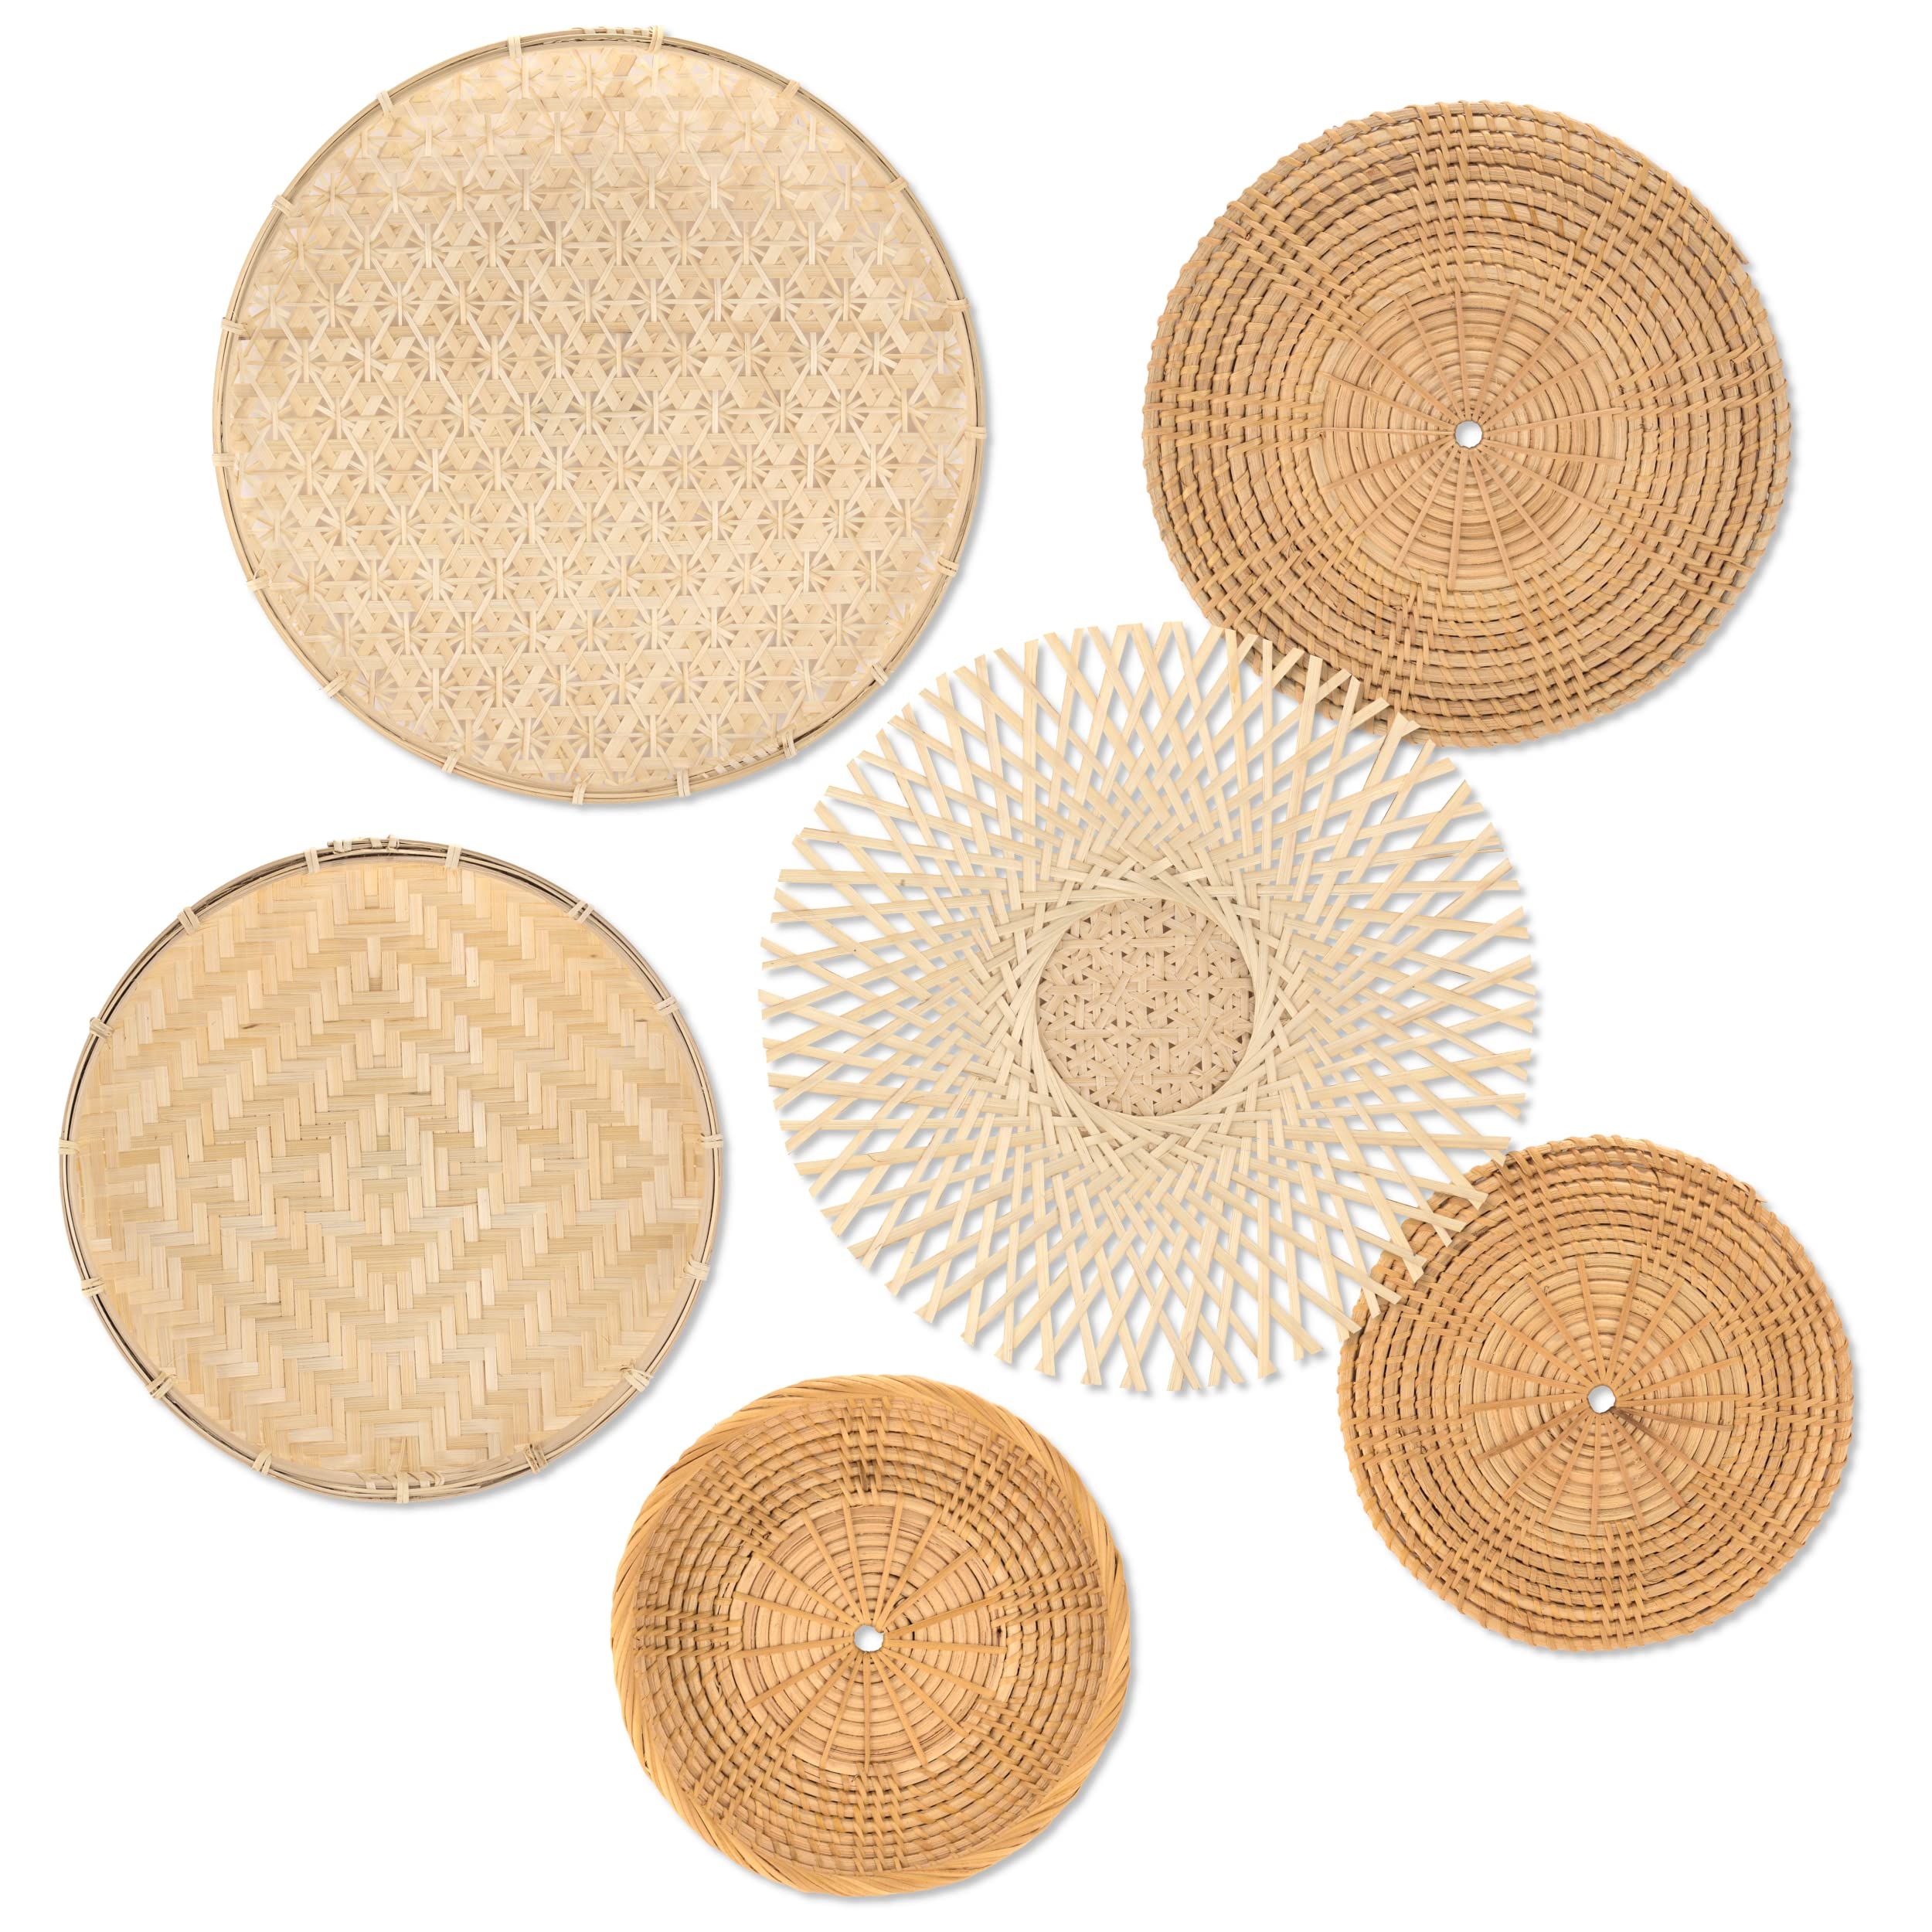 b.spoke Hanging Wall Basket Decor – Set of 6 Handmade Decorative Boho Woven Wall Baskets - Round Nat | Amazon (US)